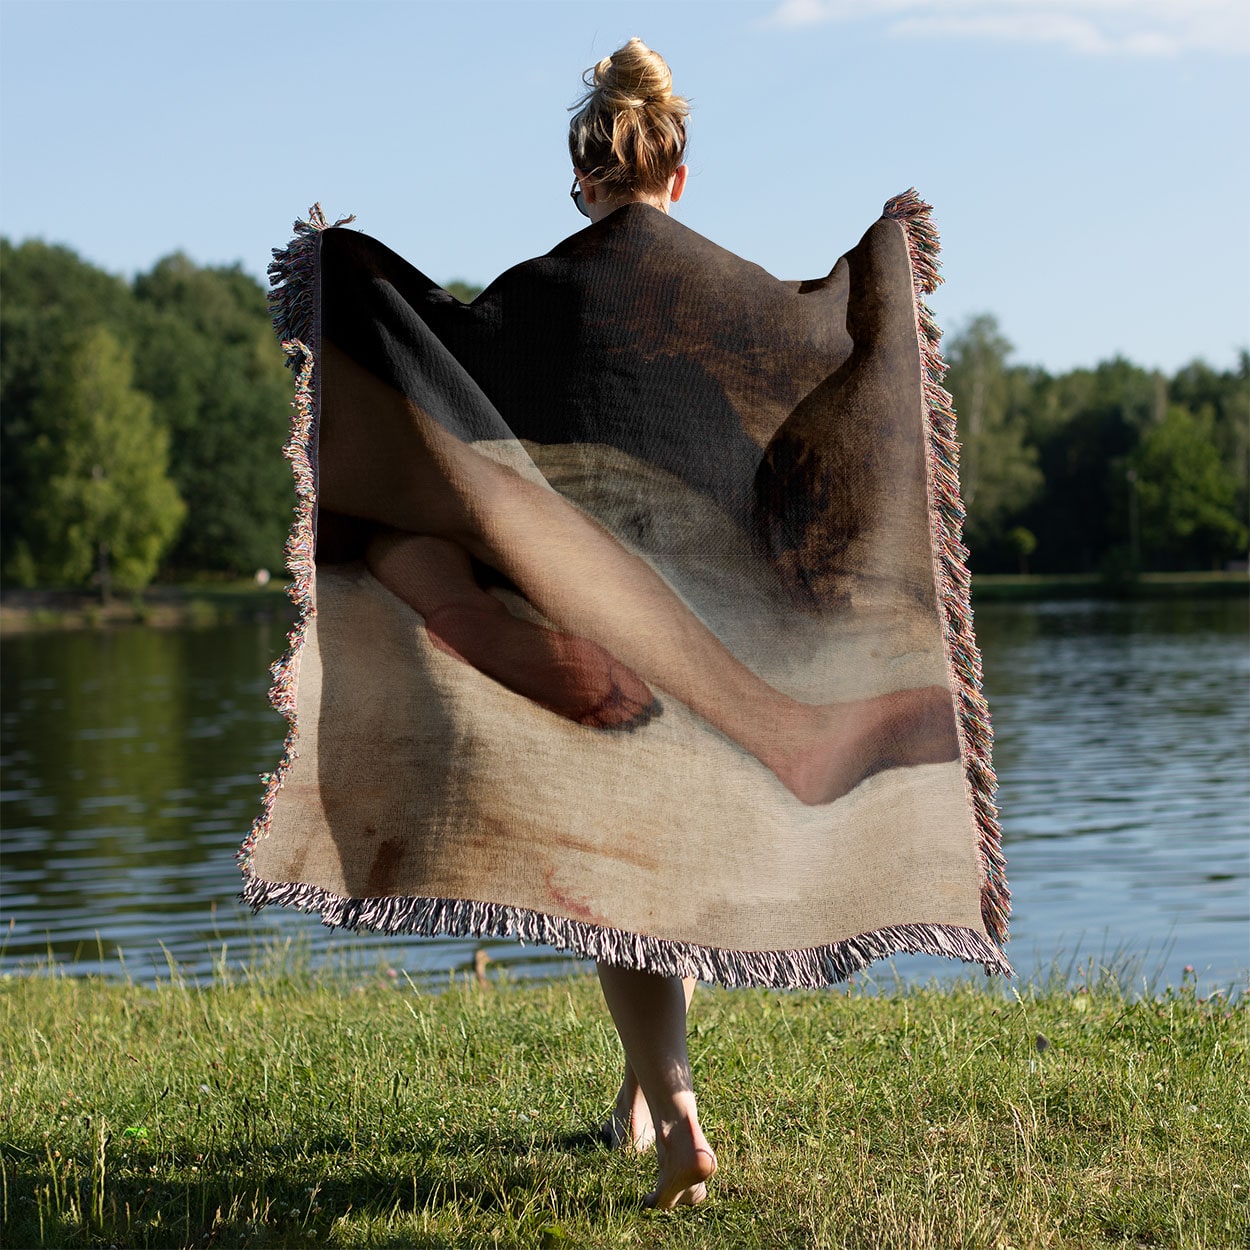 Sensual Posing Woven Blanket Held on a Woman's Back Outside